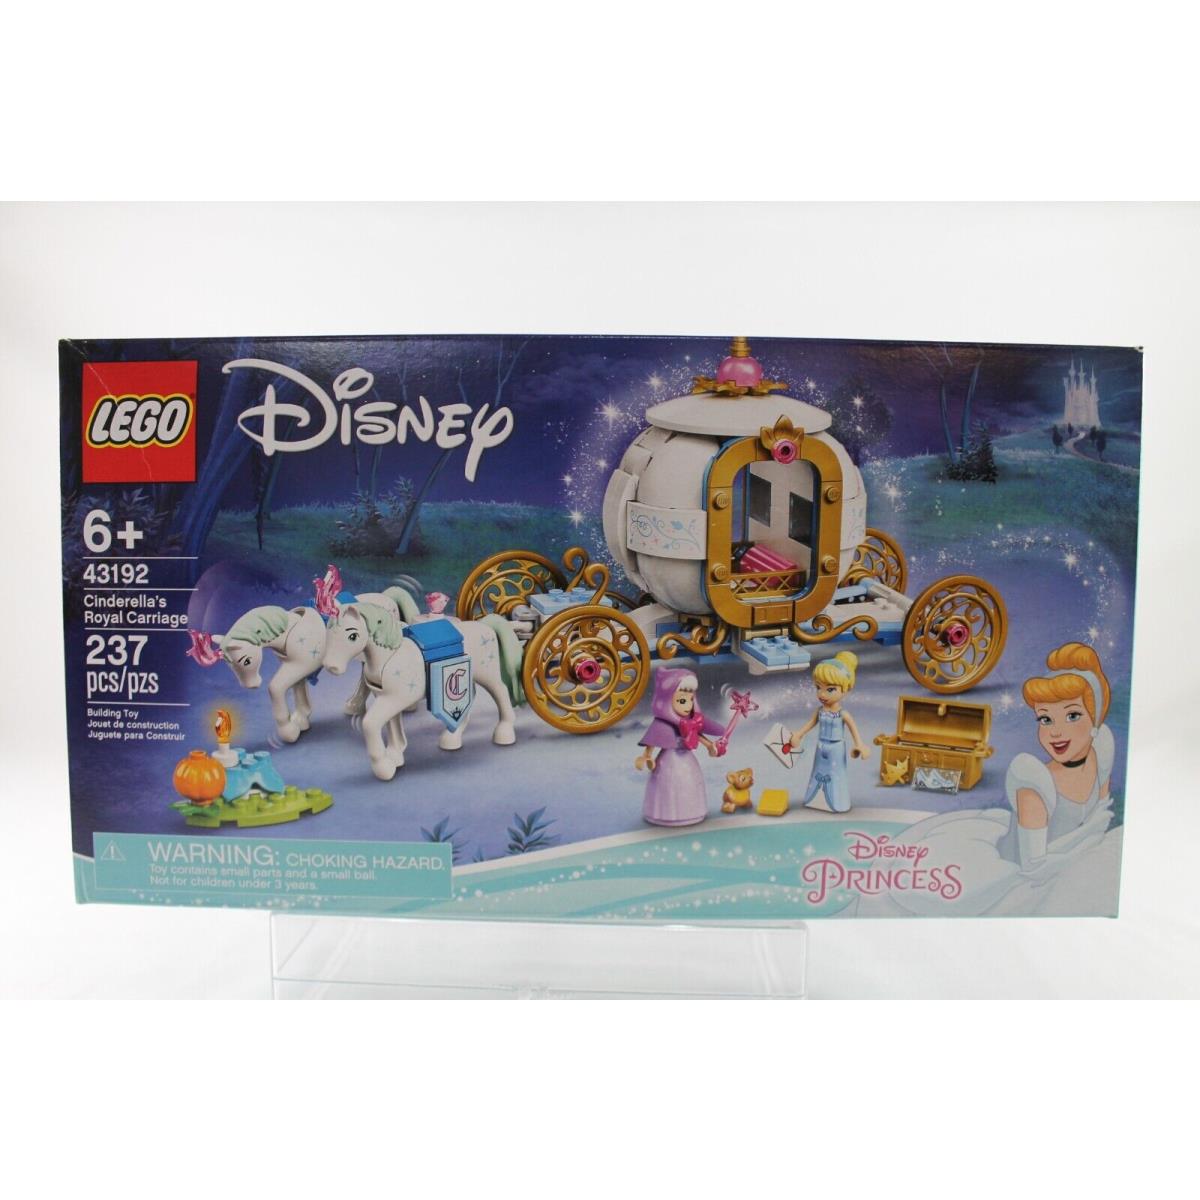 Lego Disney Cinderella s Royal Carriage 43192 Building Kit 237 Pieces